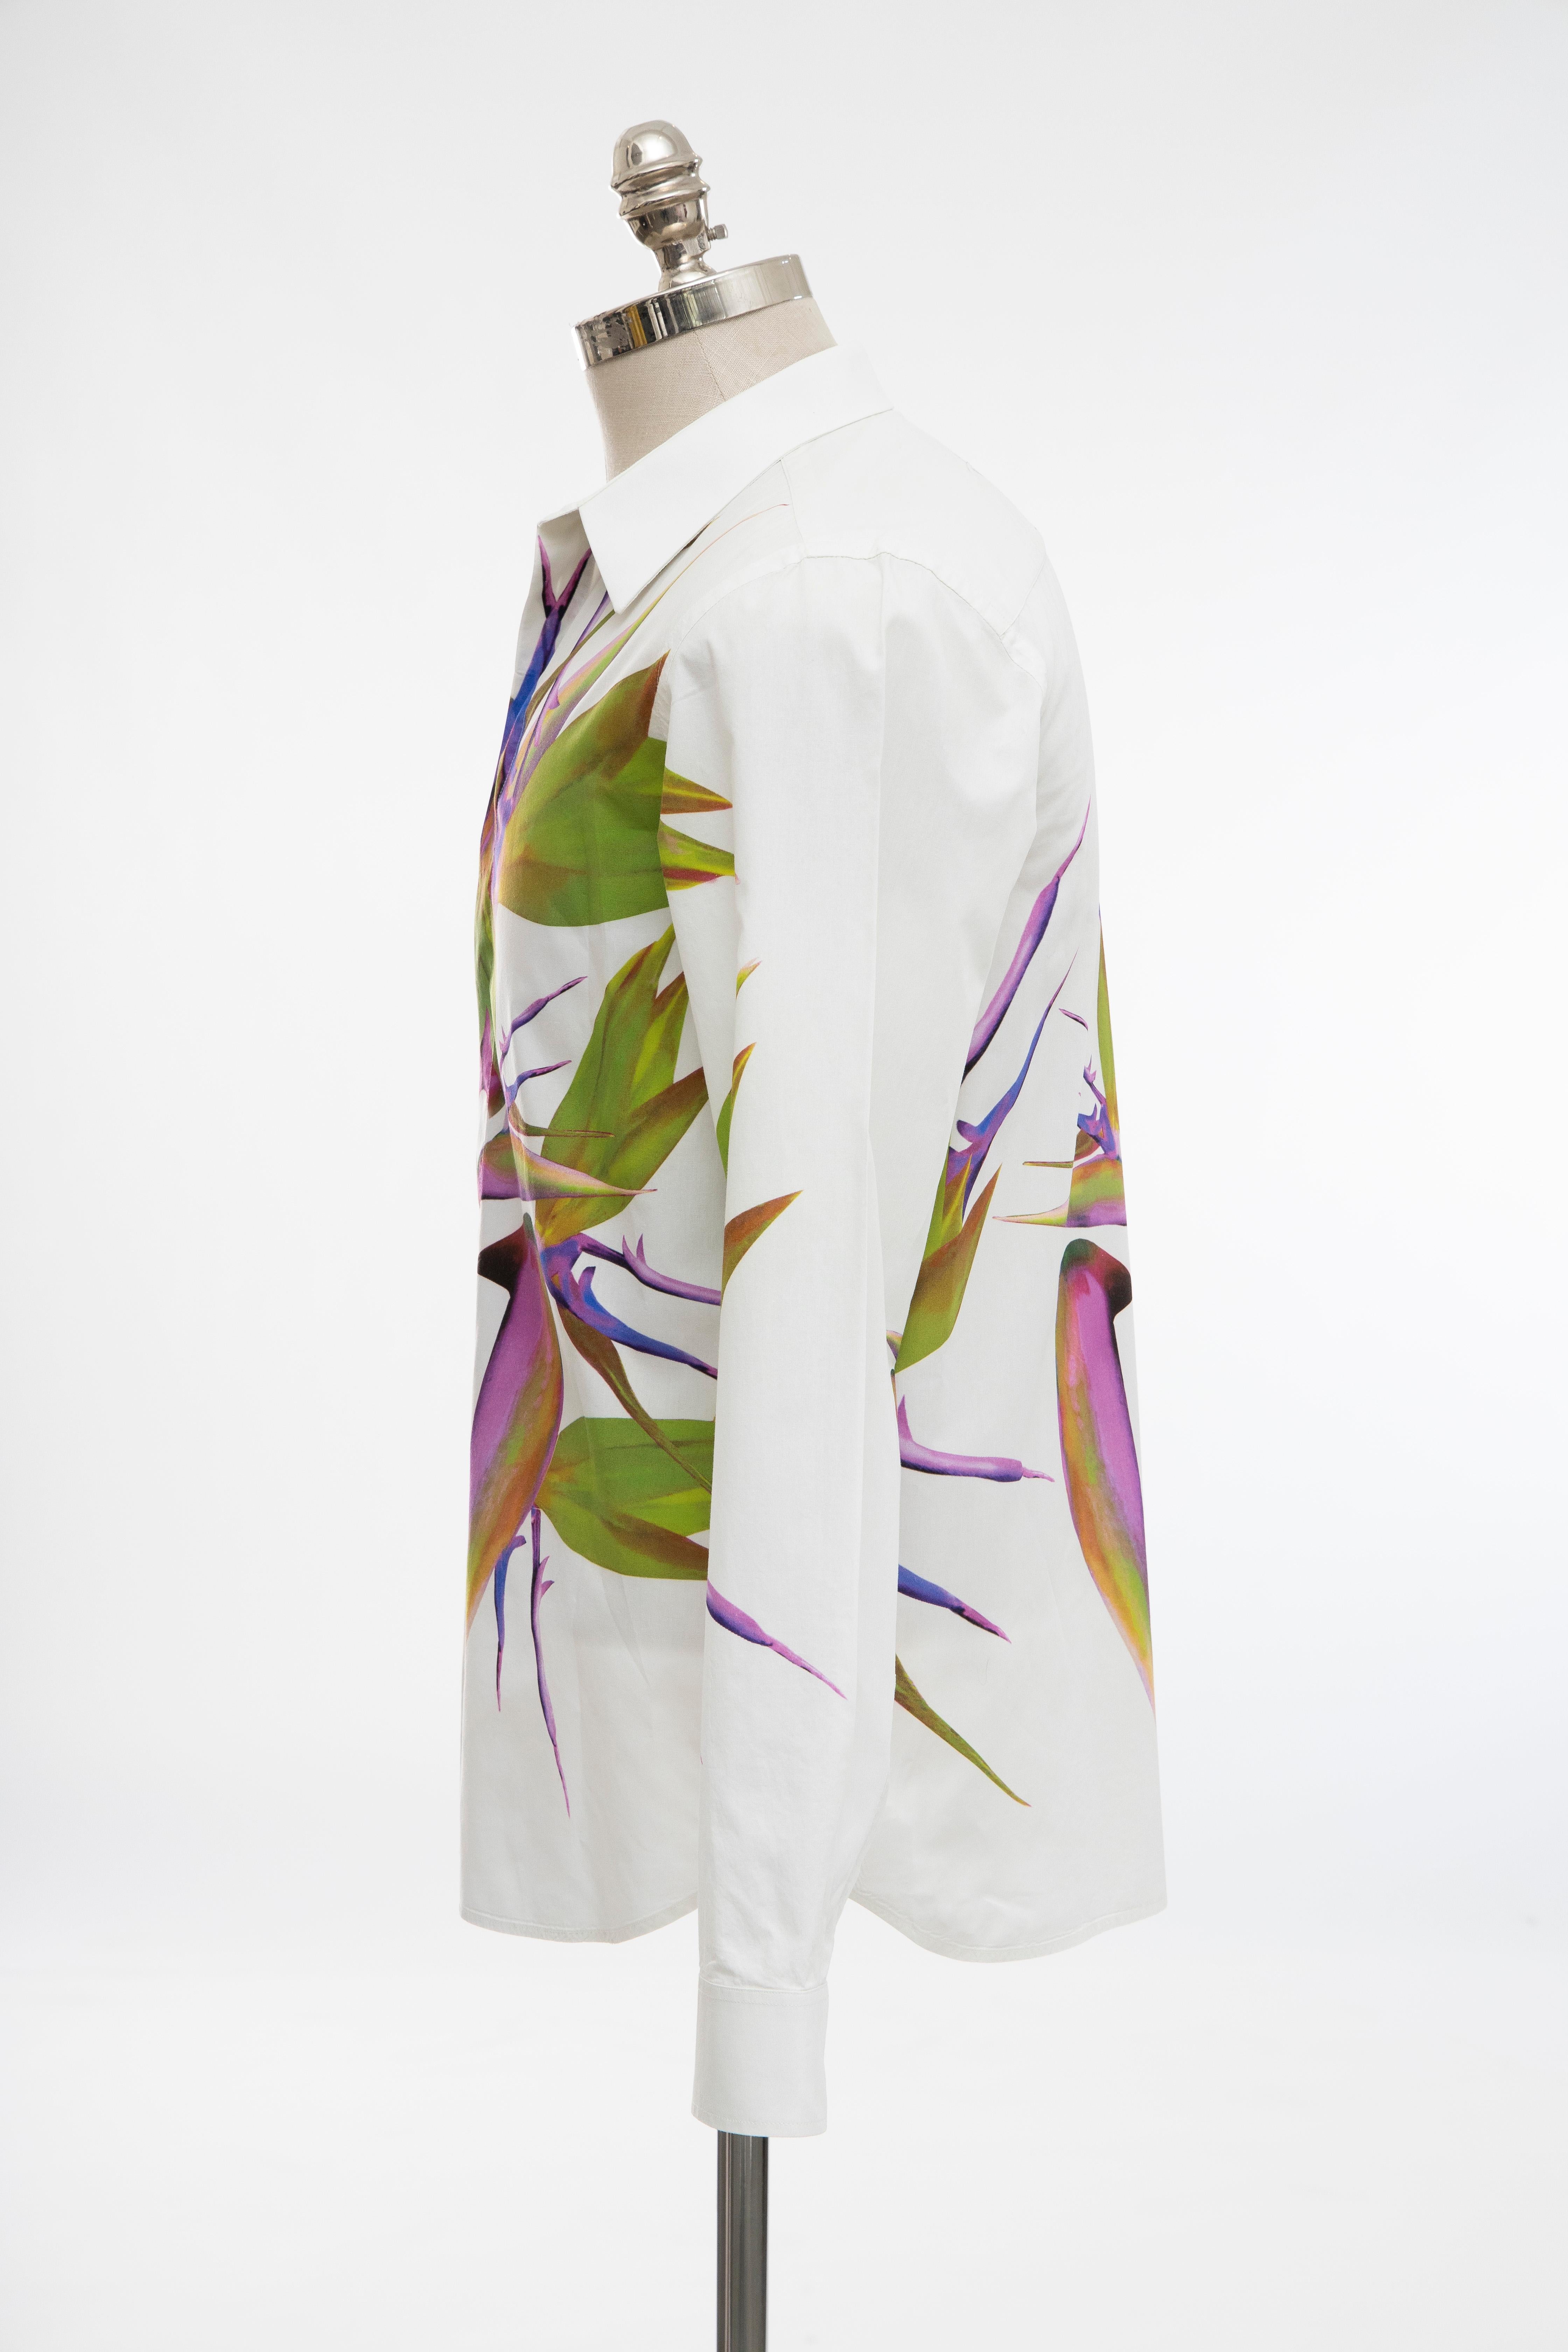 Riccardo Tisci for Givenchy Men's Cotton Birds of Paradise Shirt, Spring 2012 3